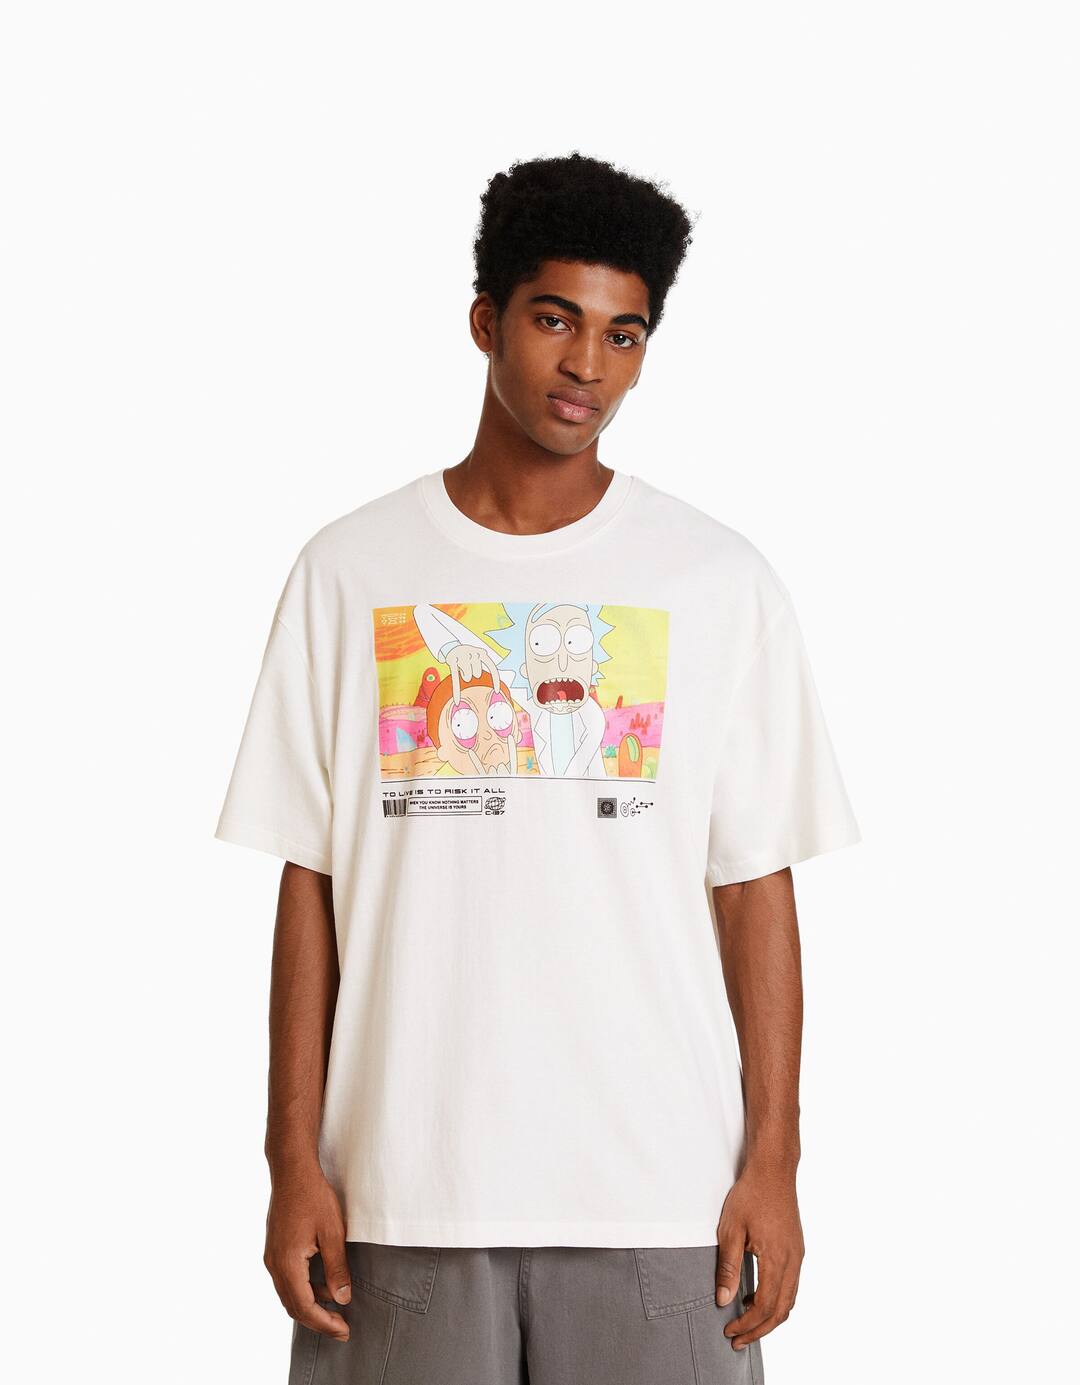 Rick & Morty print boxy fit short sleeve T-shirt